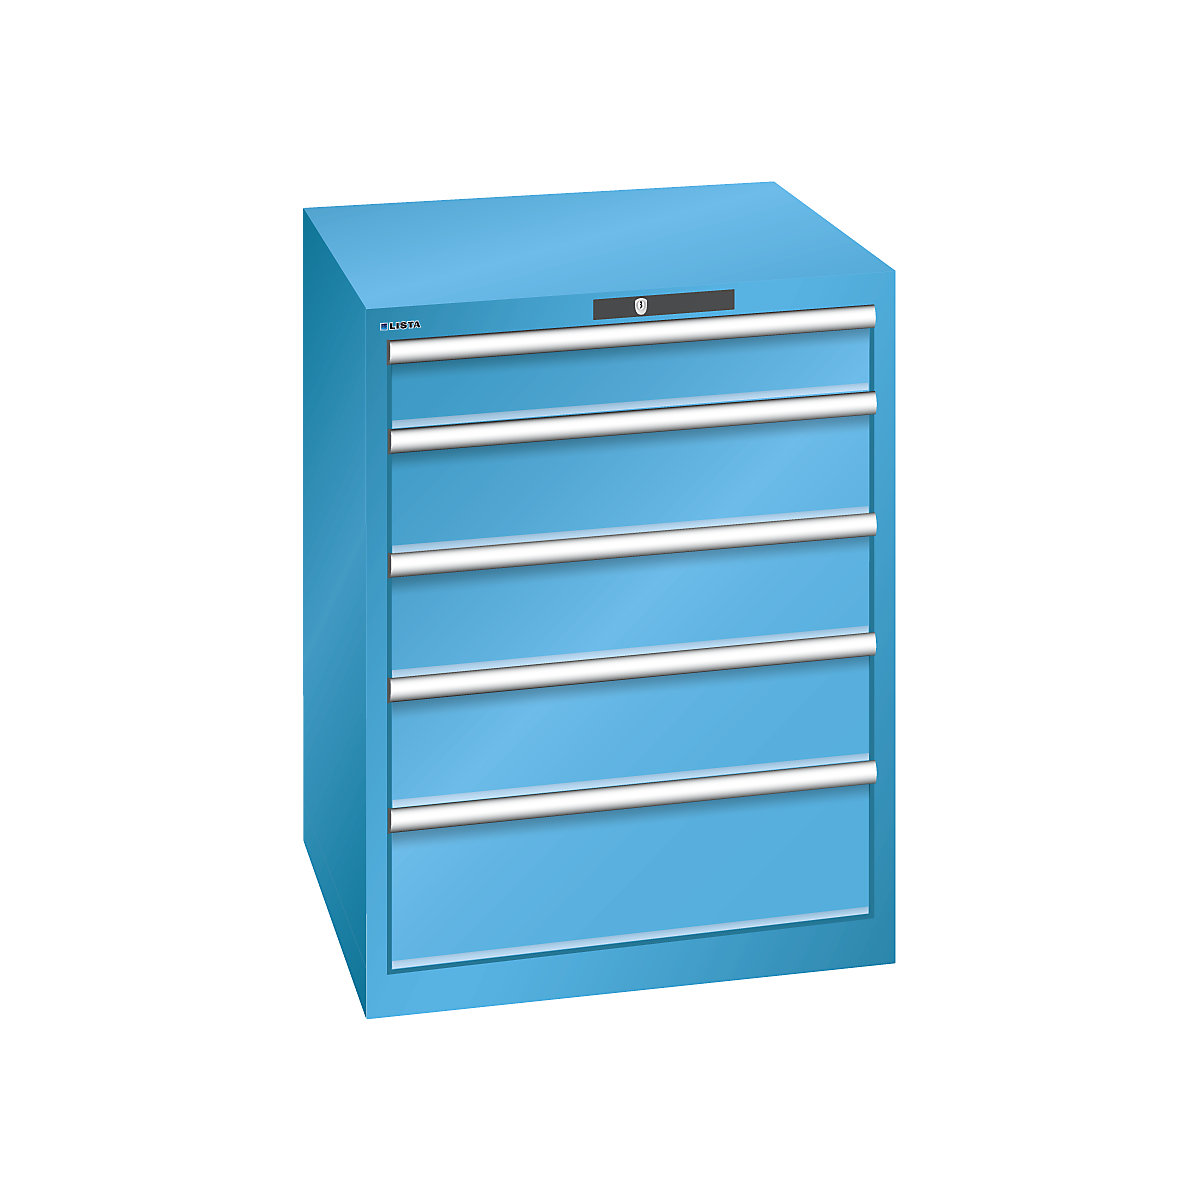 Drawer cupboard, 5 drawers - LISTA